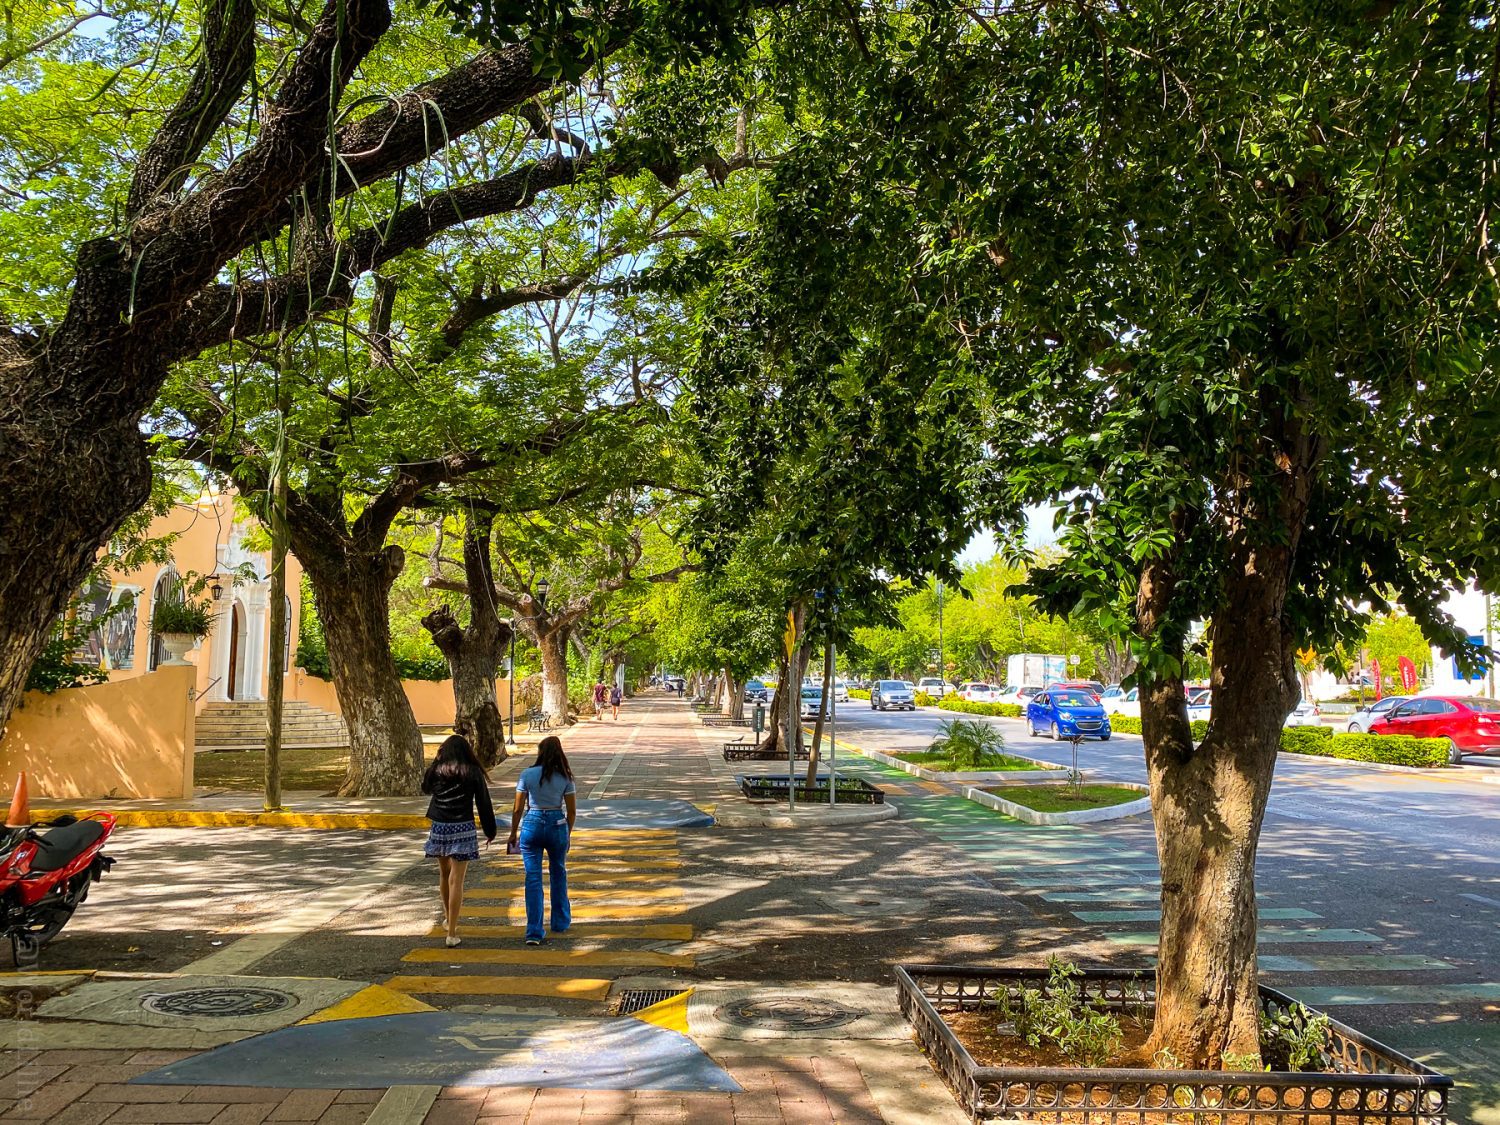 The wide, inviting sidewalks of Paseo de Montejo.